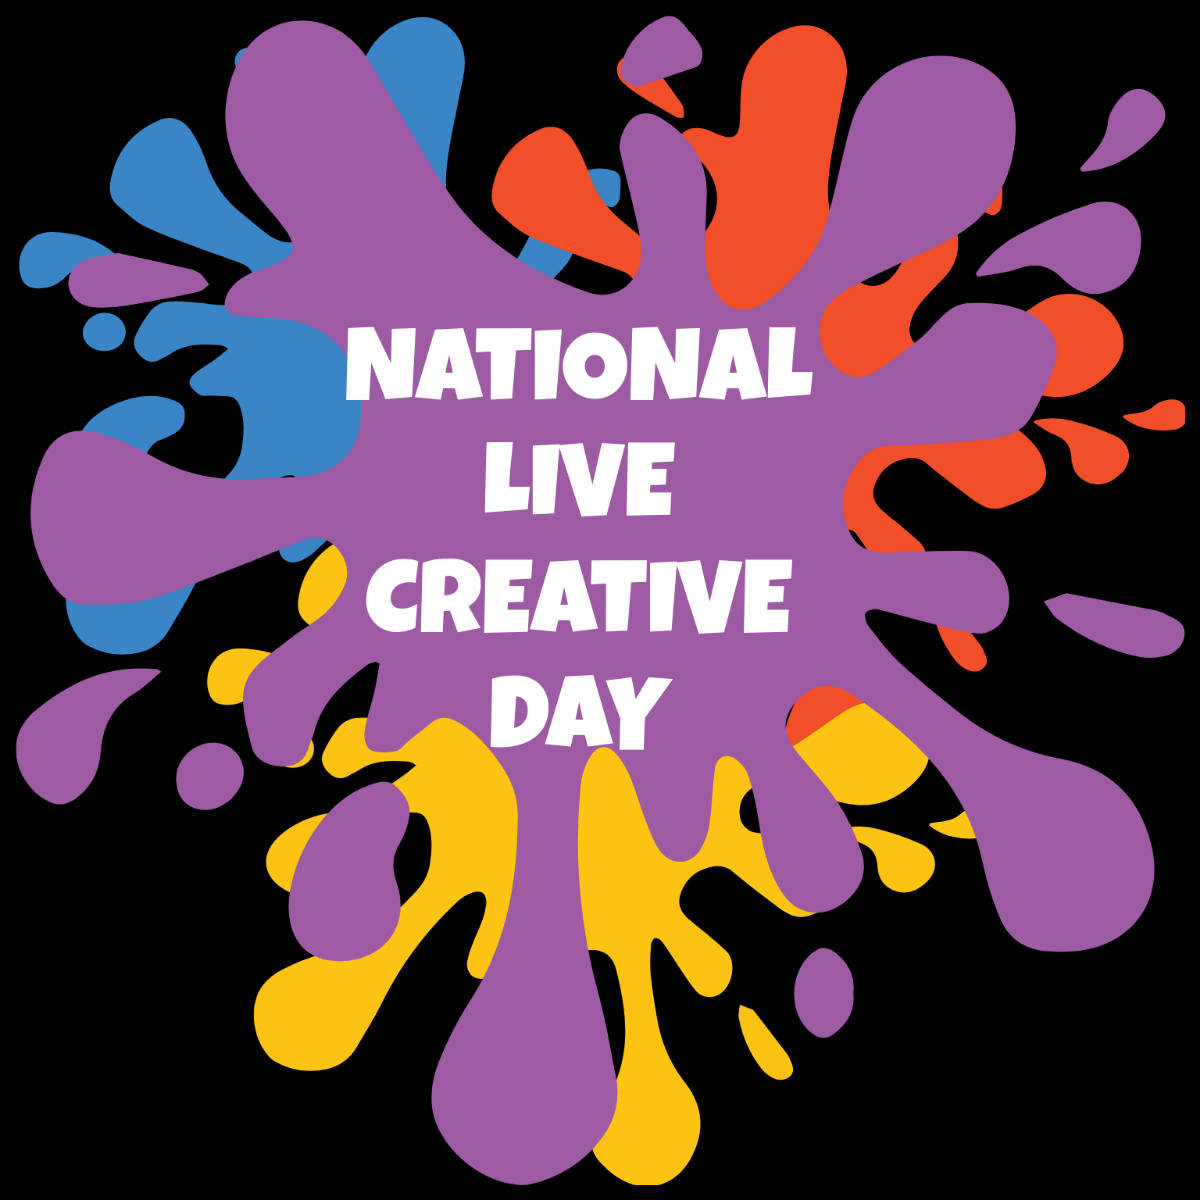 National Live Creative Day Celebration Vector